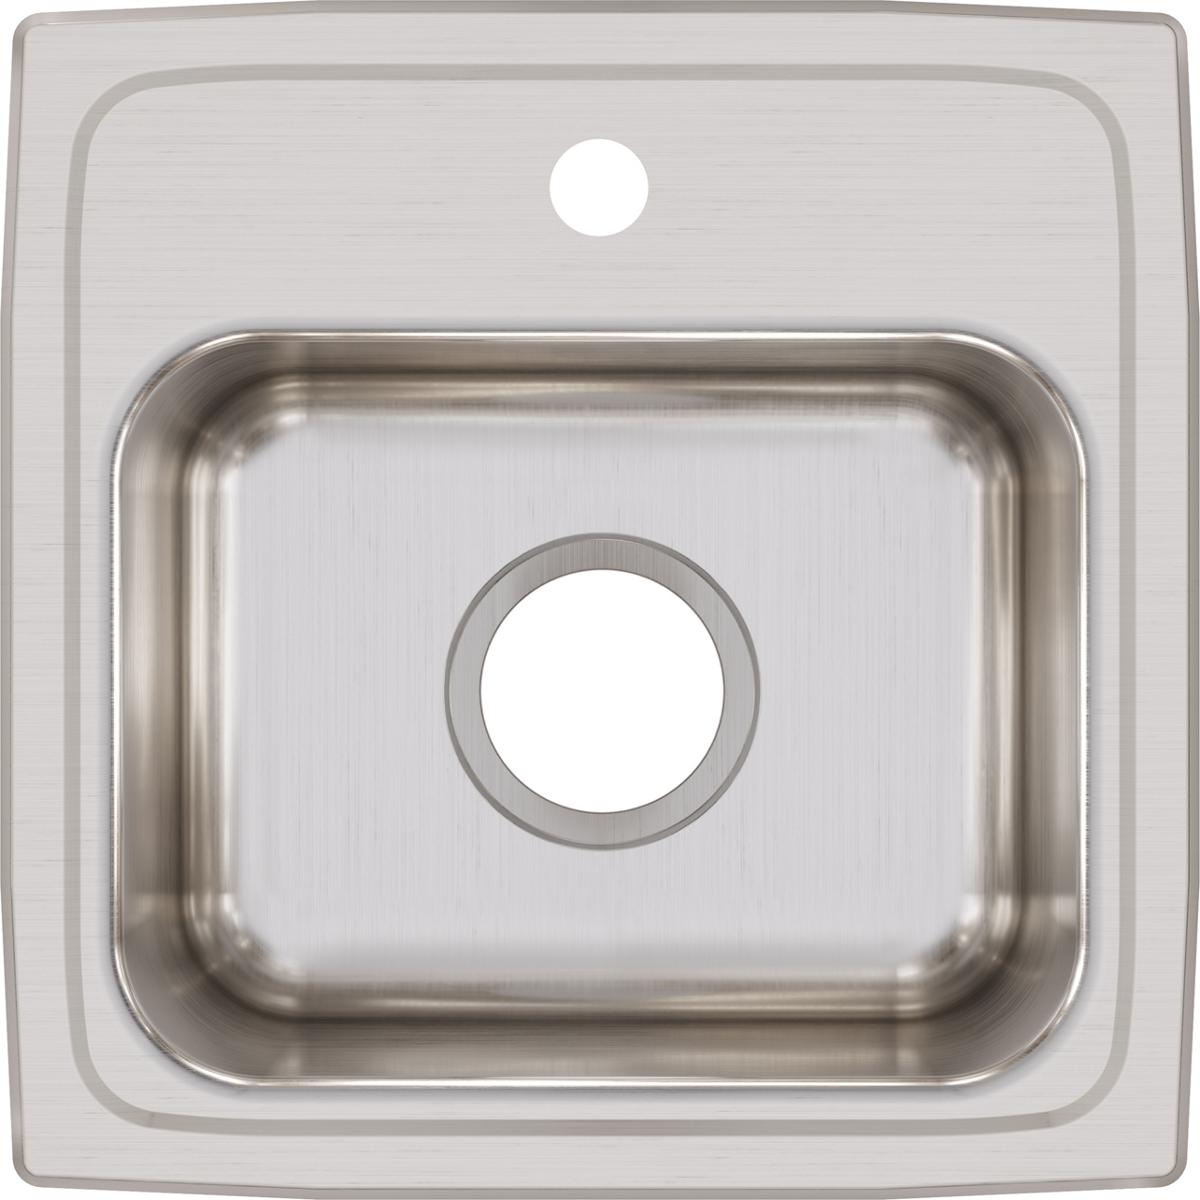 Elkay Lustertone Classic Stainless Steel 15" x 15" x 7-1/8" Single Bowl Drop-in Bar Sink